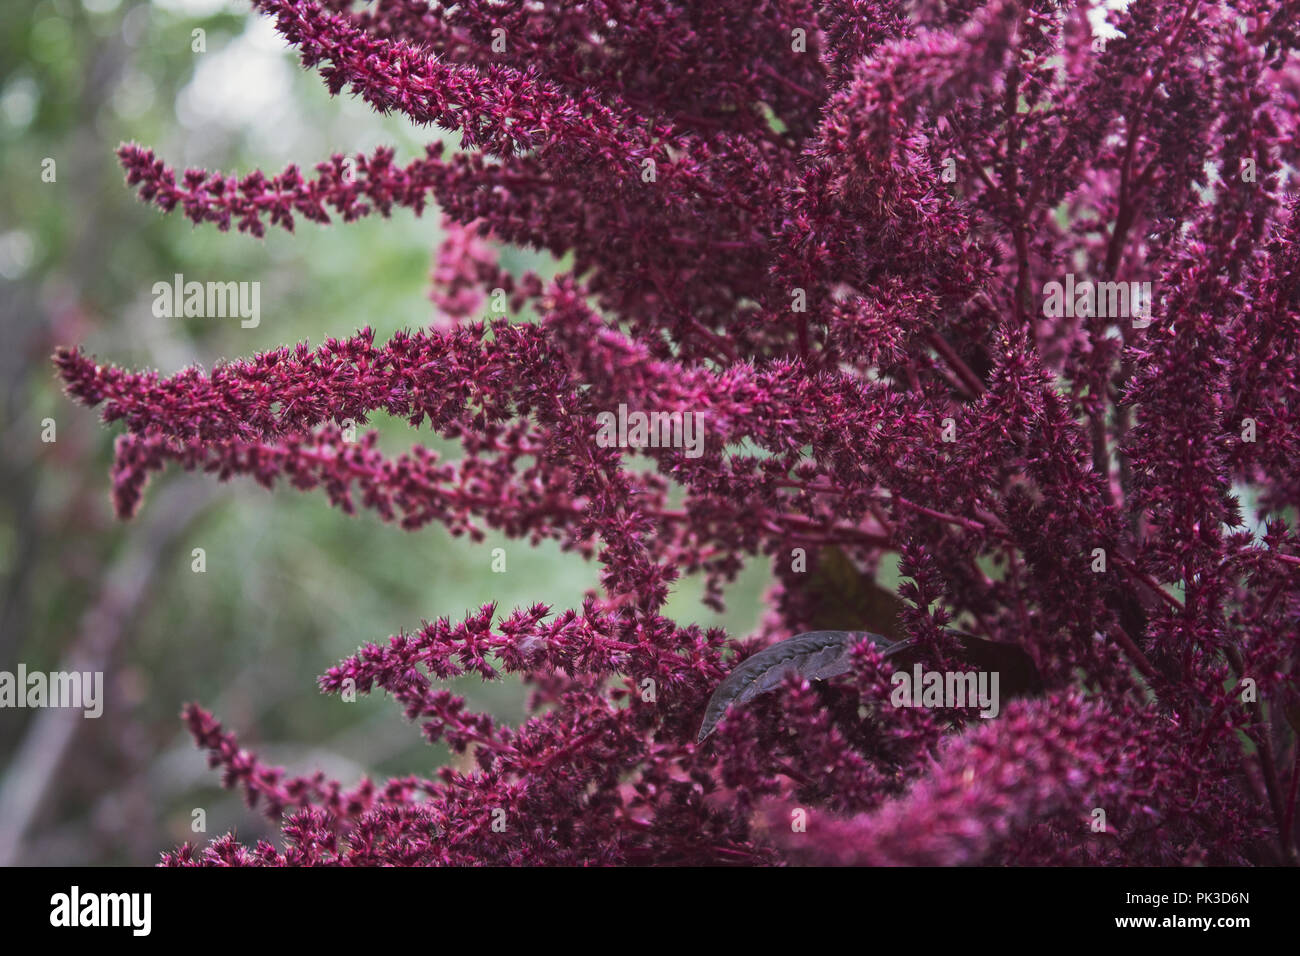 Amaranth plant. Ornamental purple inflorescences of amaranth. Bright fluffy blossom. Stock Photo